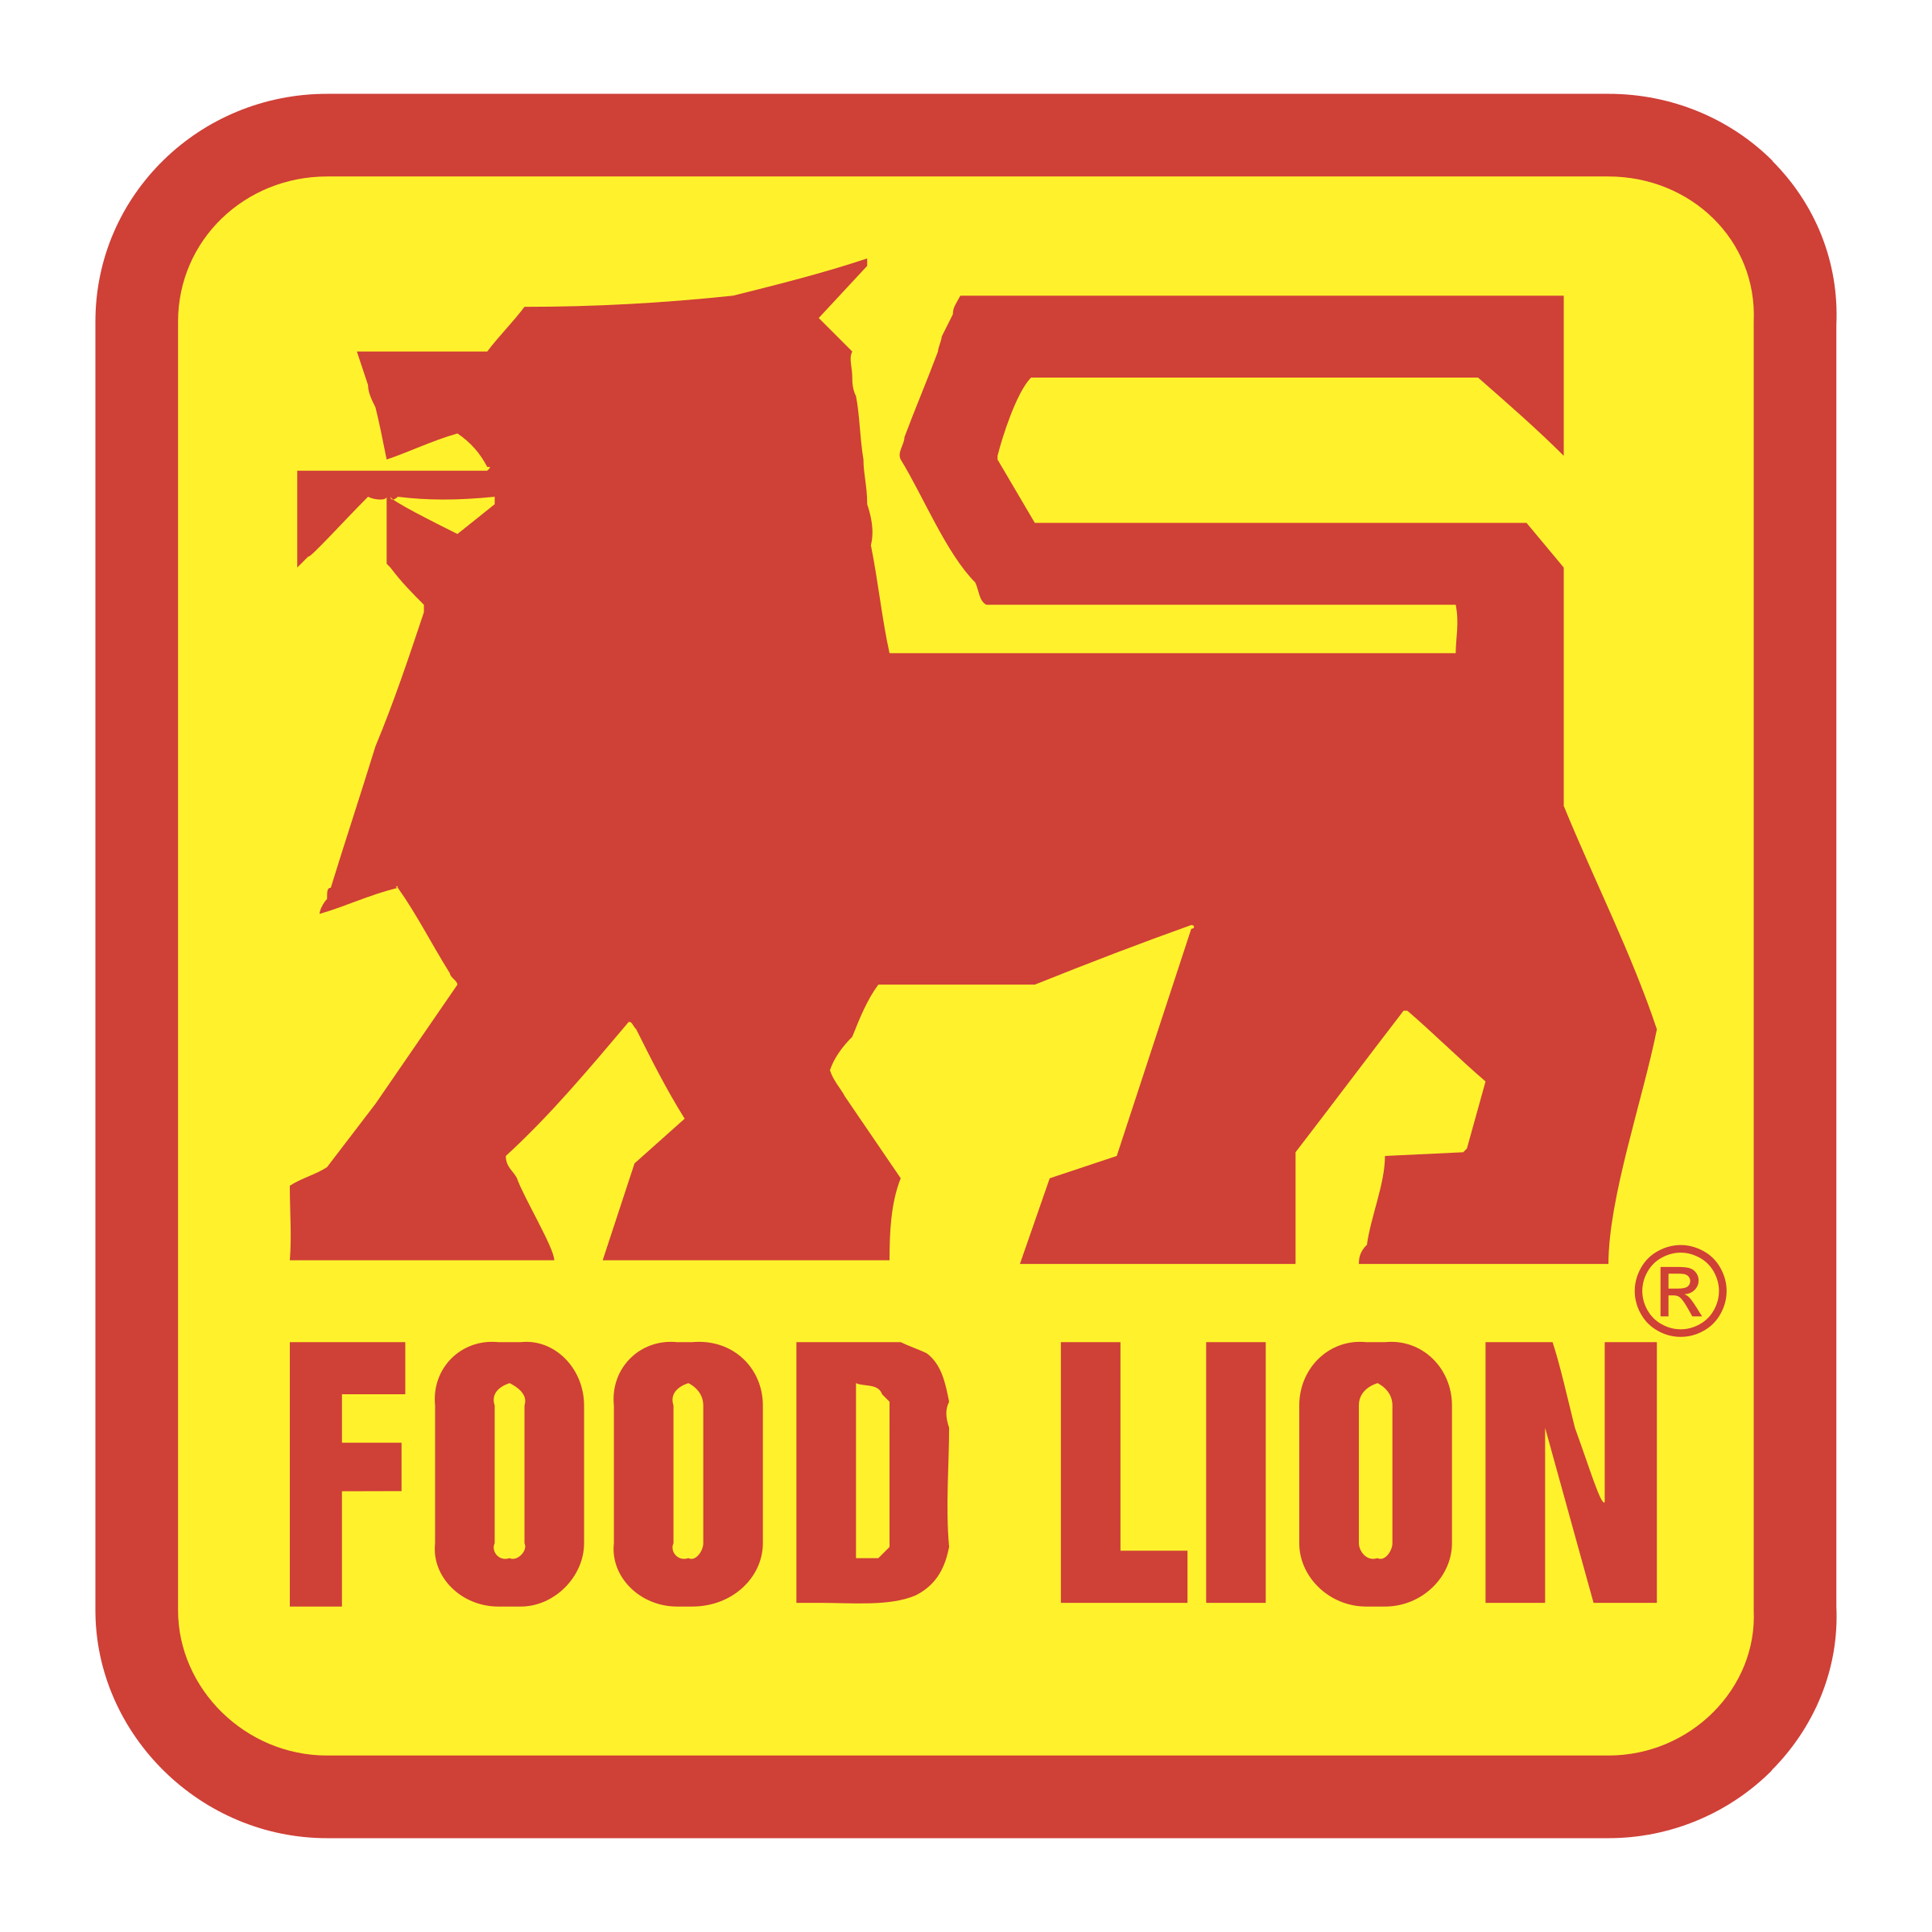 Red Black Yellow Food Logo - Food Lion Logo PNG Transparent & SVG Vector - Freebie Supply